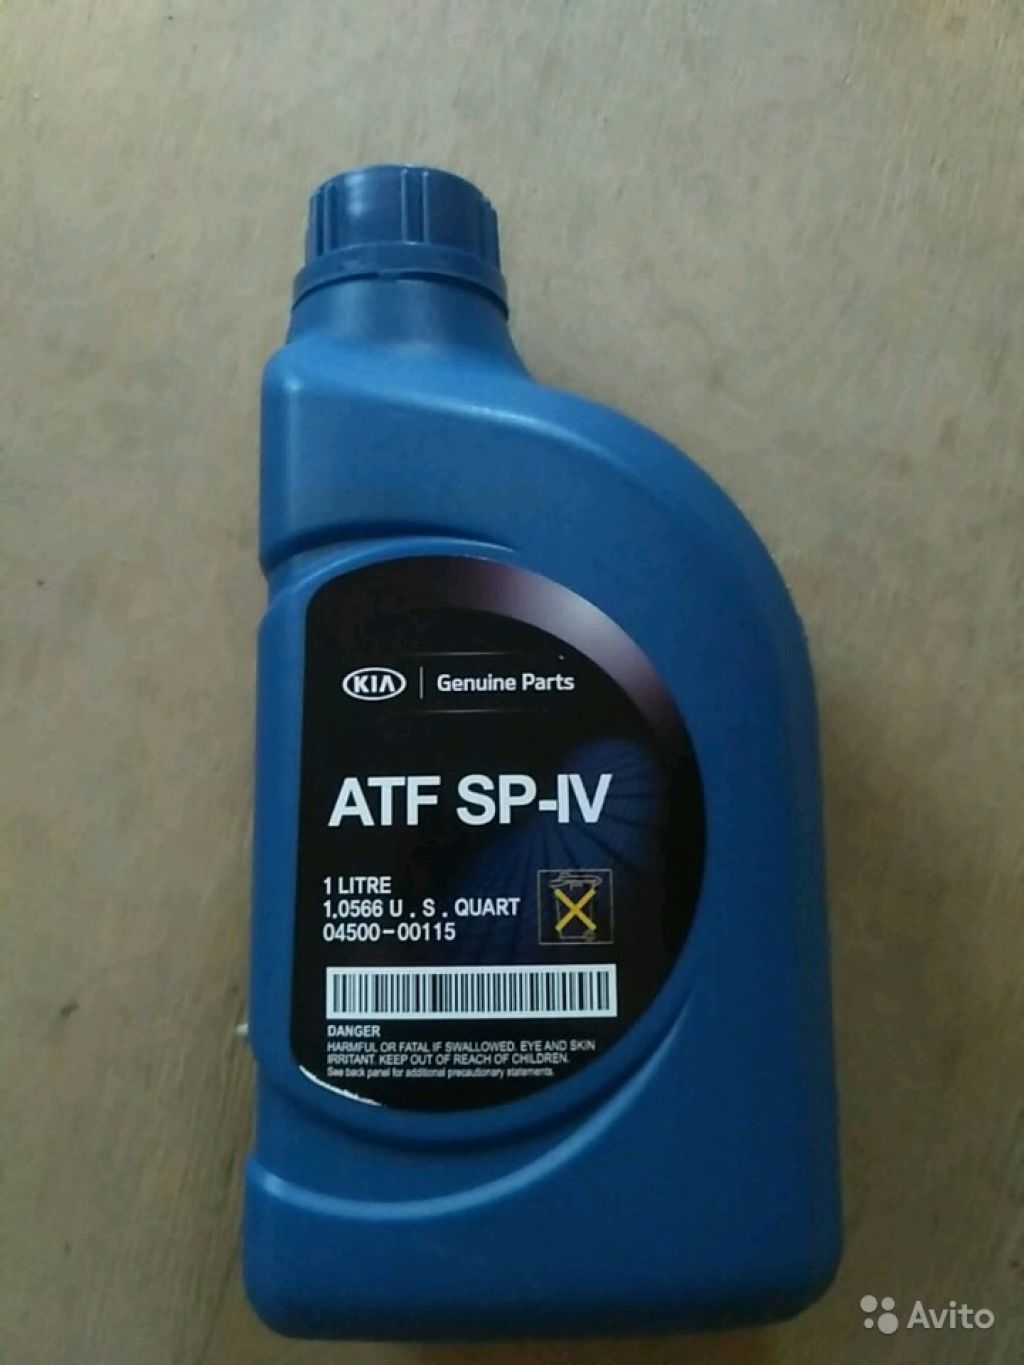 Atf 4 kia. ATF sp4 Kia. Kia ATF SP-IV. ATF SP 4 Kia 4 литра. ATF SP-IV M-1.